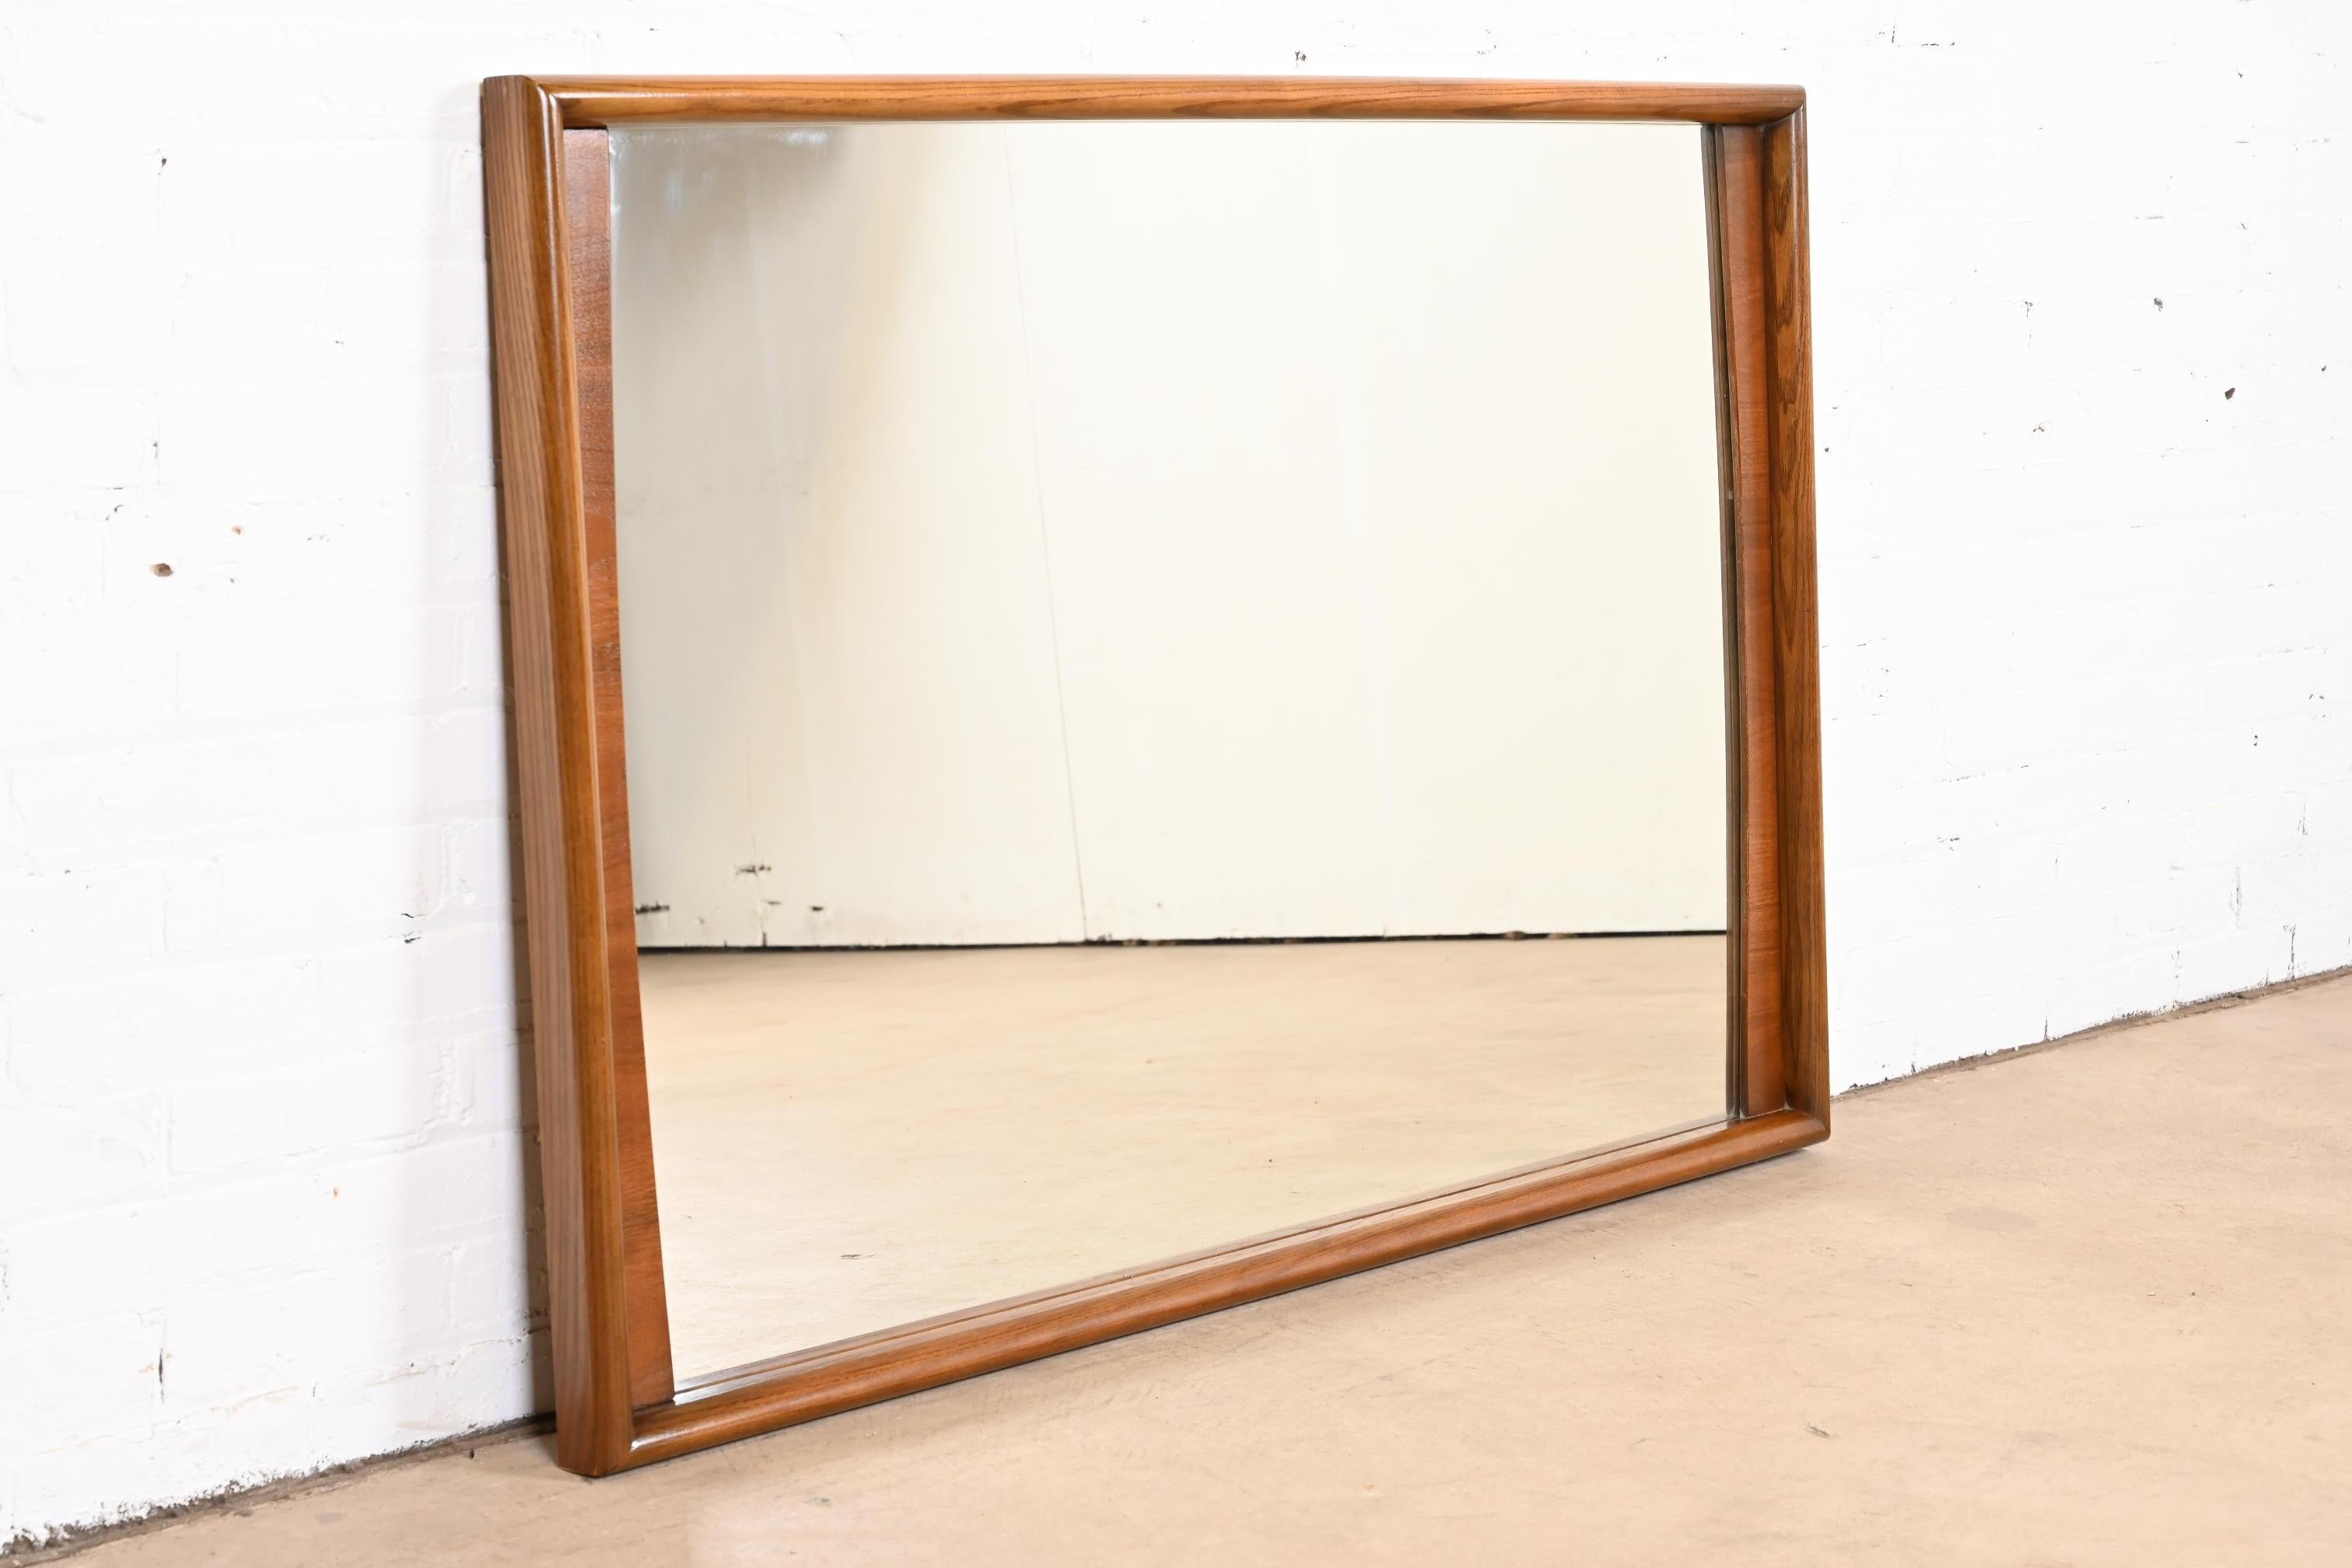 American Mid-Century Modern Sculpted Walnut Framed Wall Mirror by United, 1960s